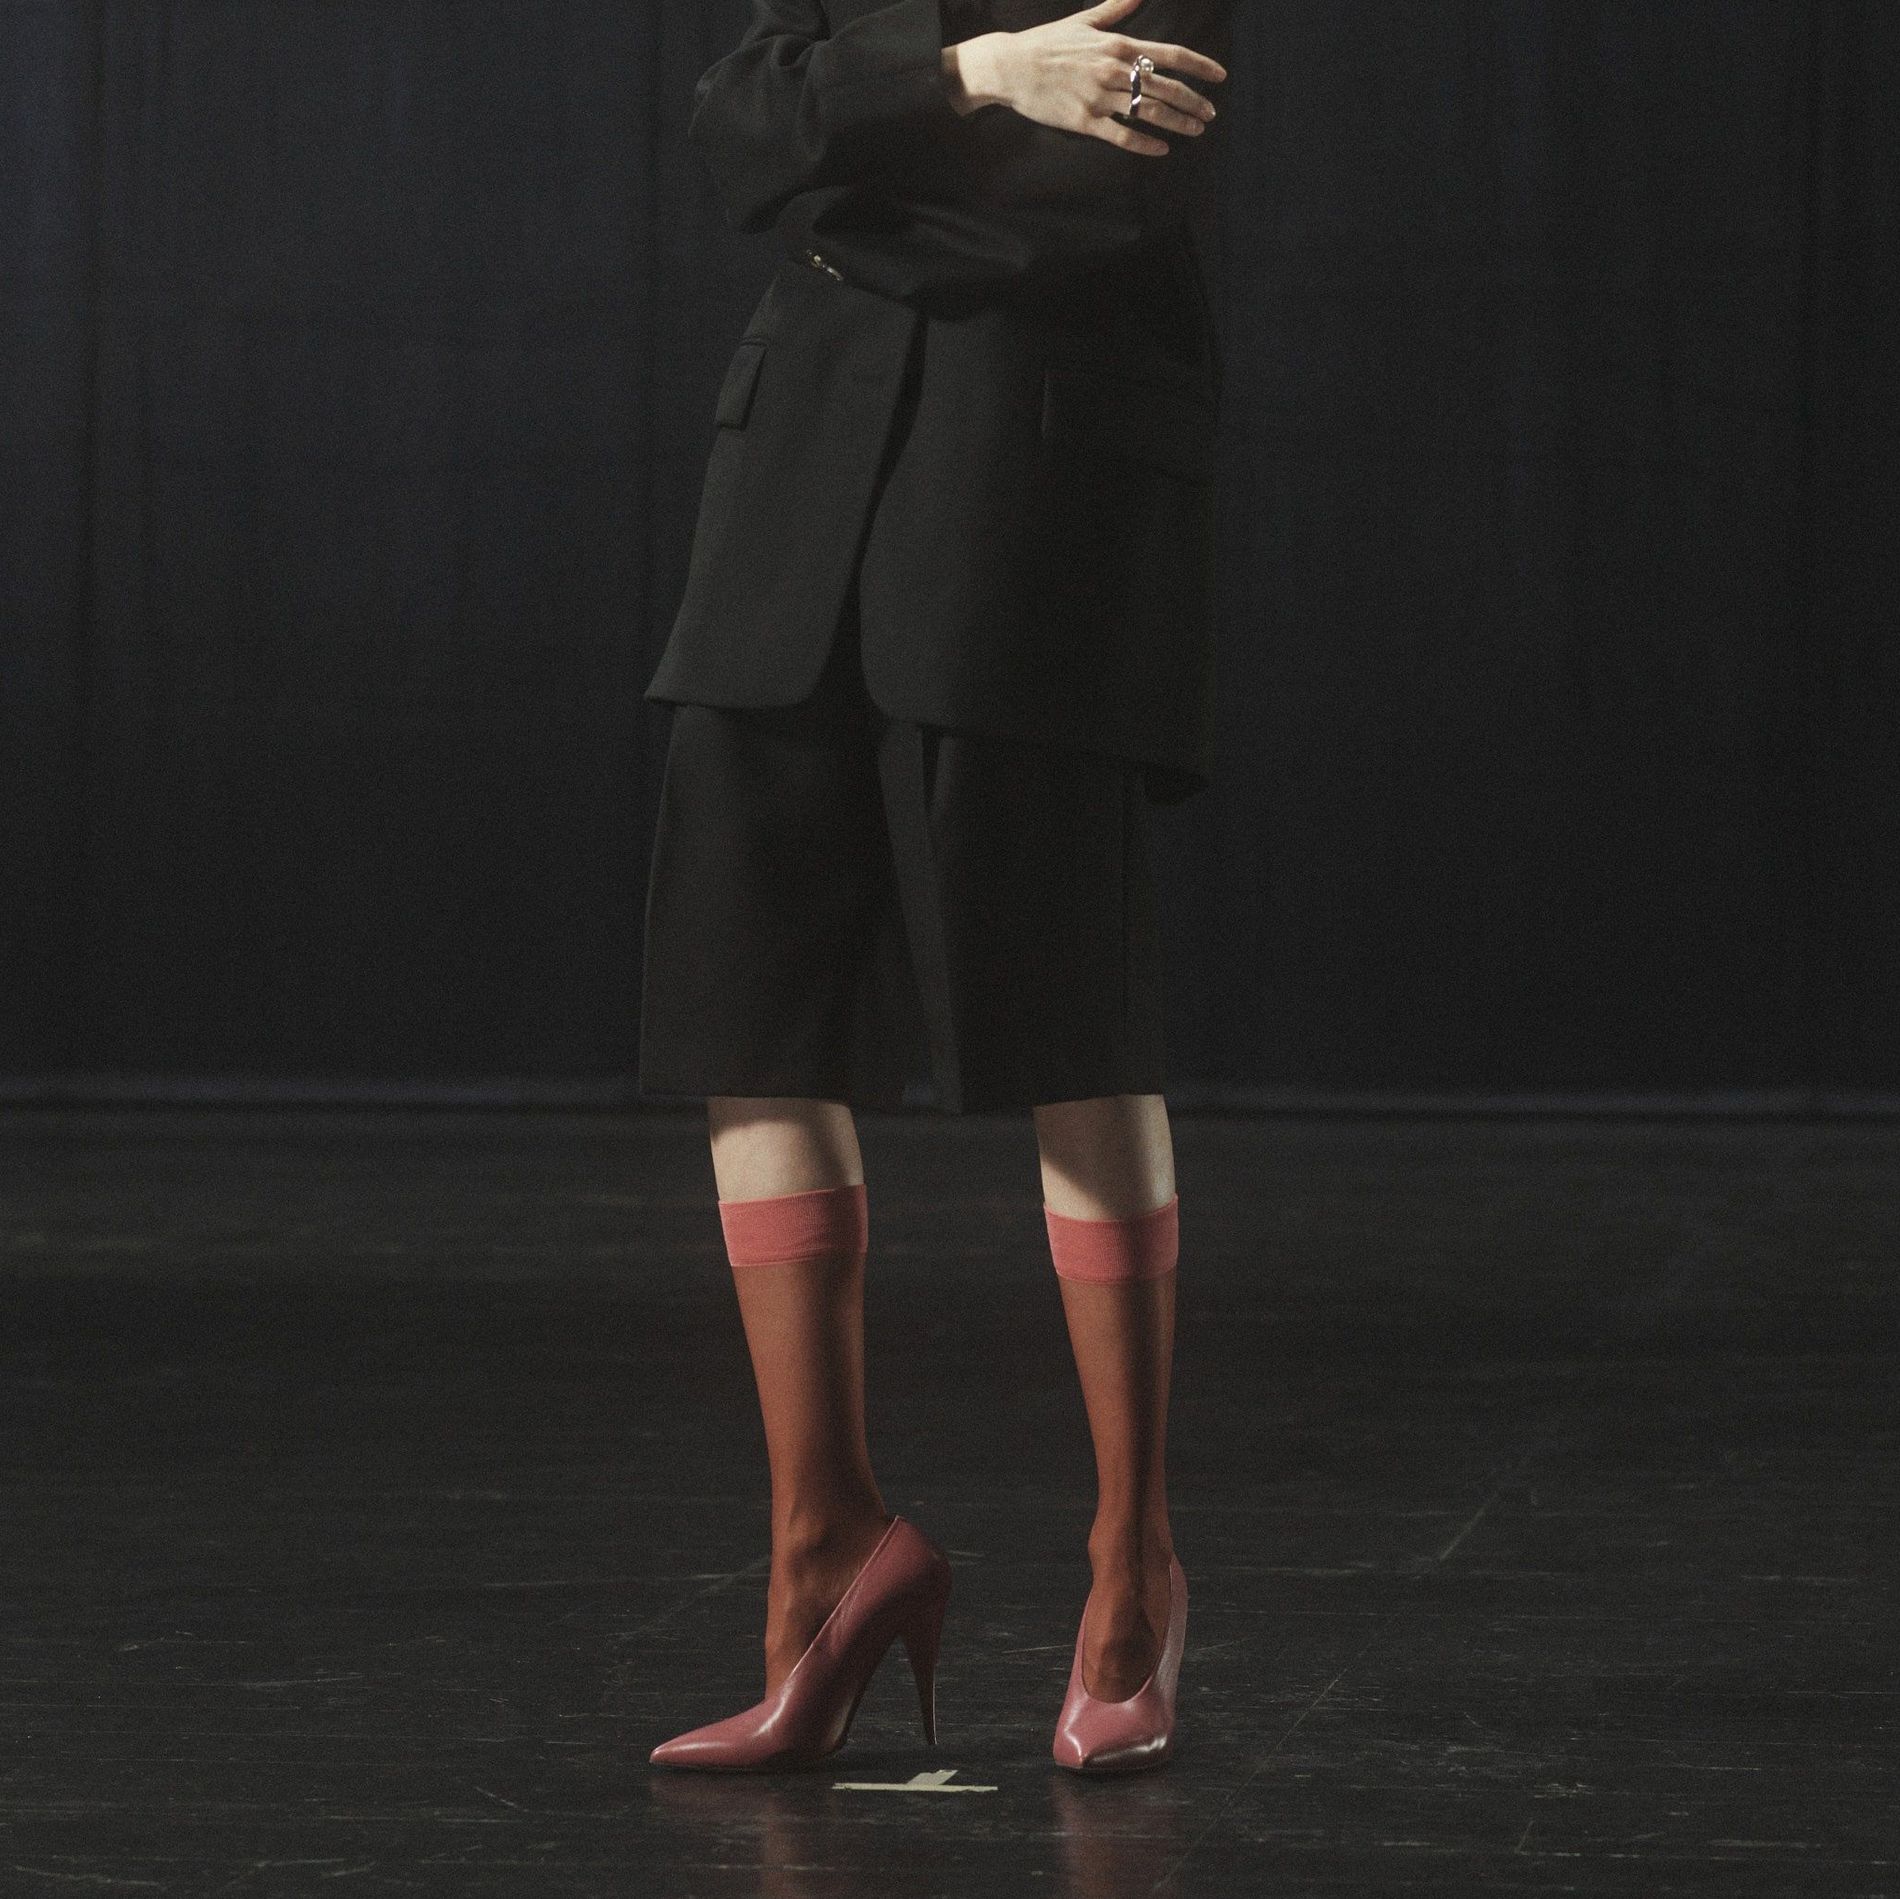 Dries Van Noten Fall 2021 with rust knee high socks